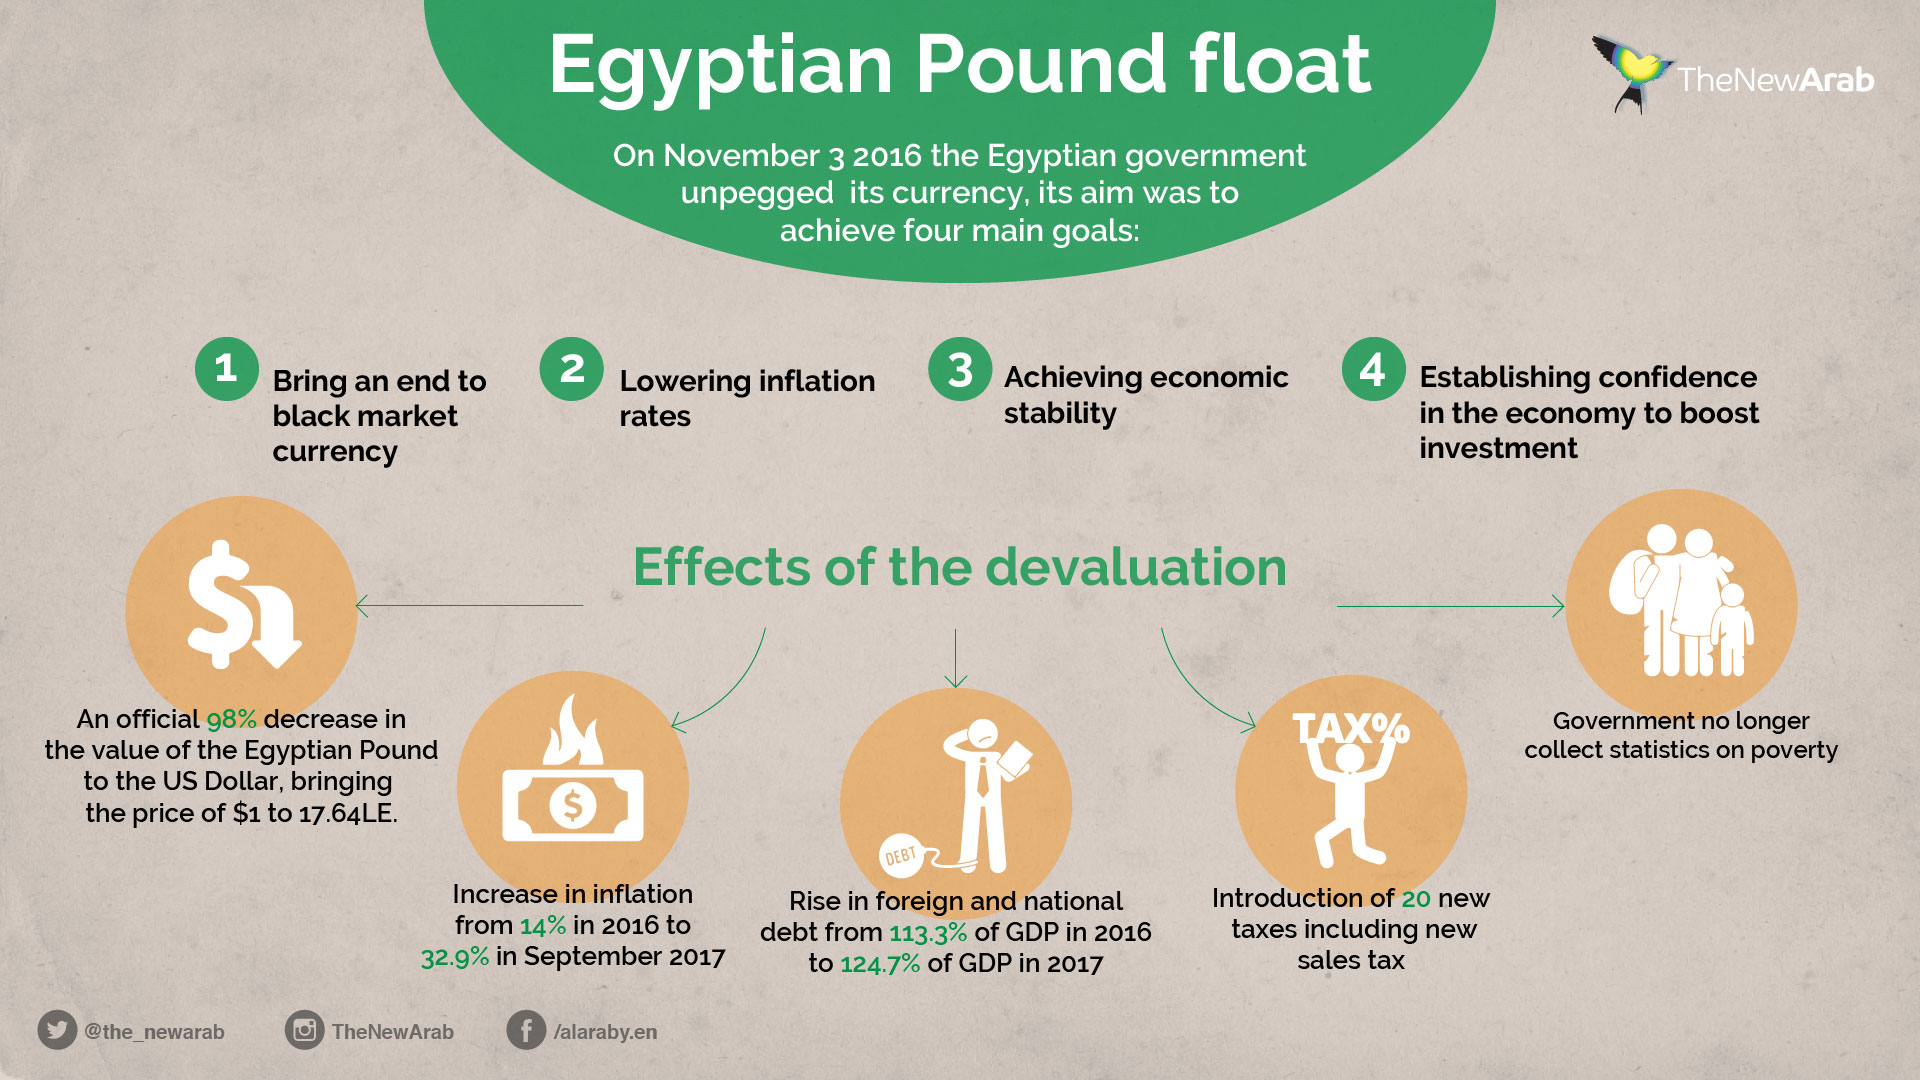 infographic - Egypt pound float-01.jpg